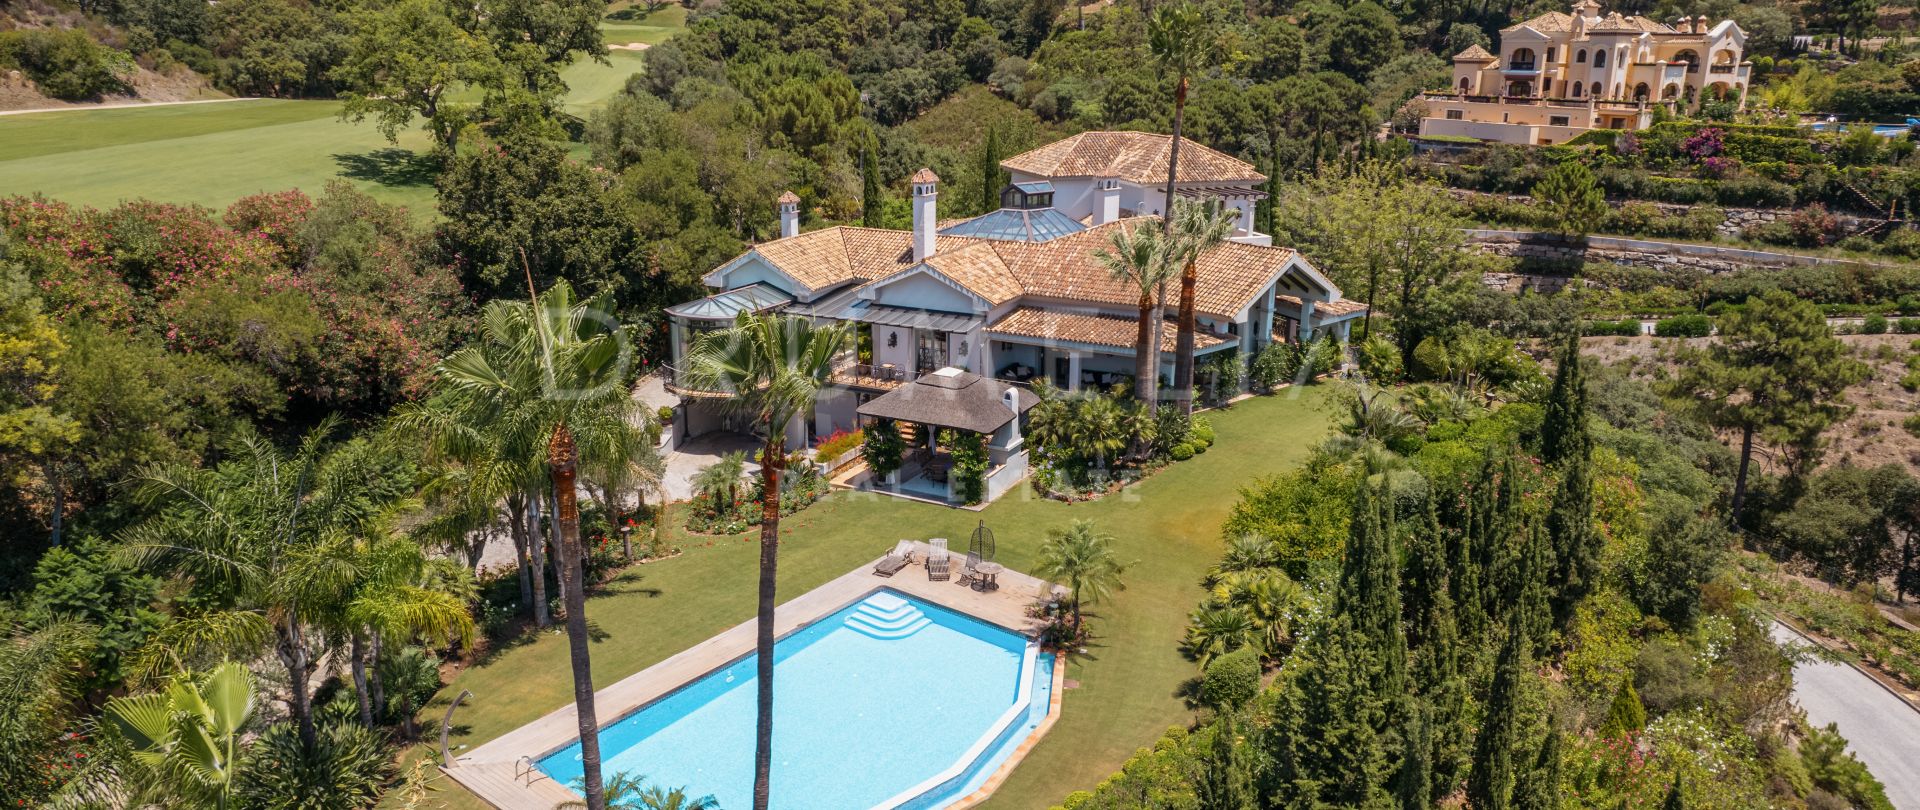 Spektakuläre High-End-Familie große Villa mit herrlichem Blick in hohen La Zagaleta, Benahavis